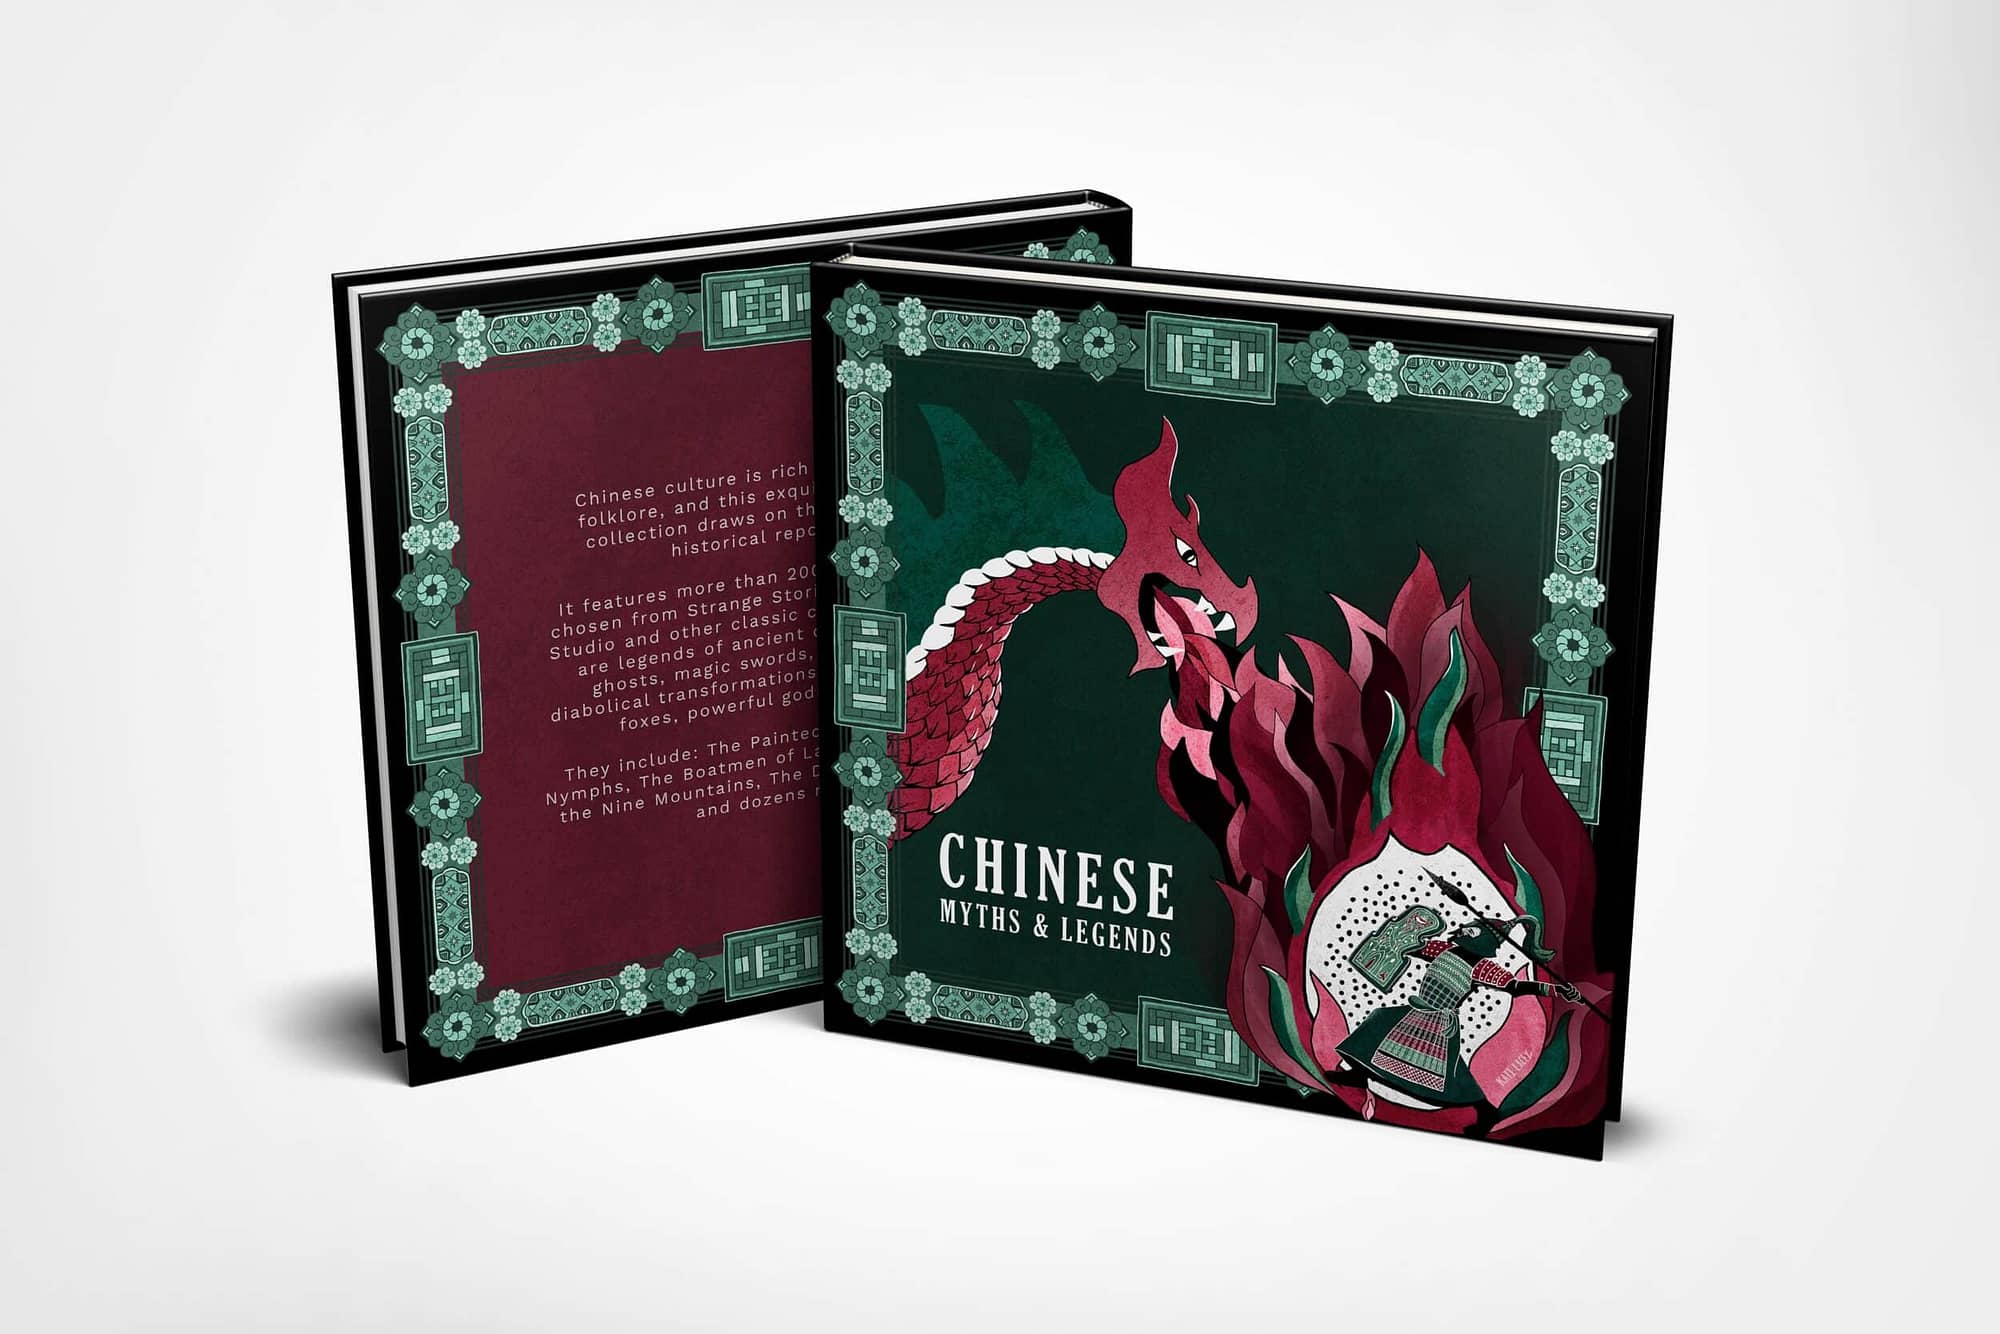 Chinese-myths-legends-book-cover-design-illustration